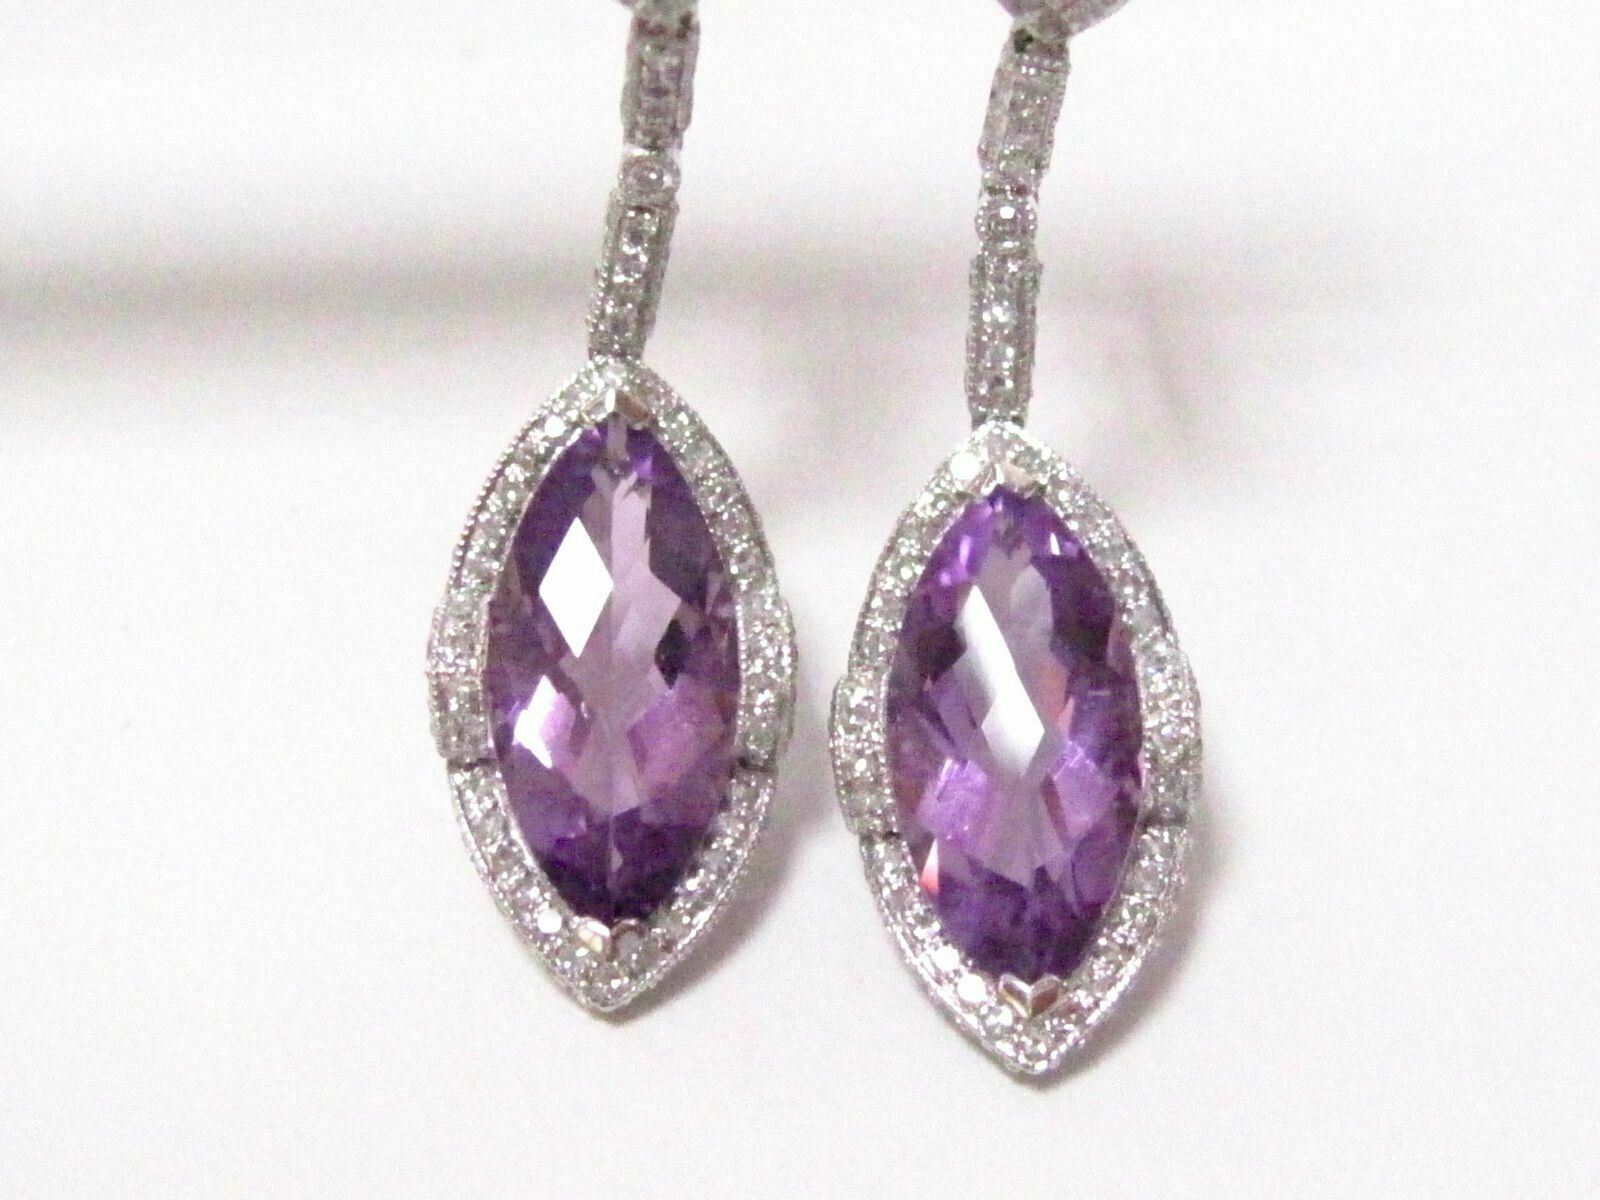 10.66 TCW Natural Marquise Purple Amethyst & Diamond Drop Earrings 14k WhiteGold